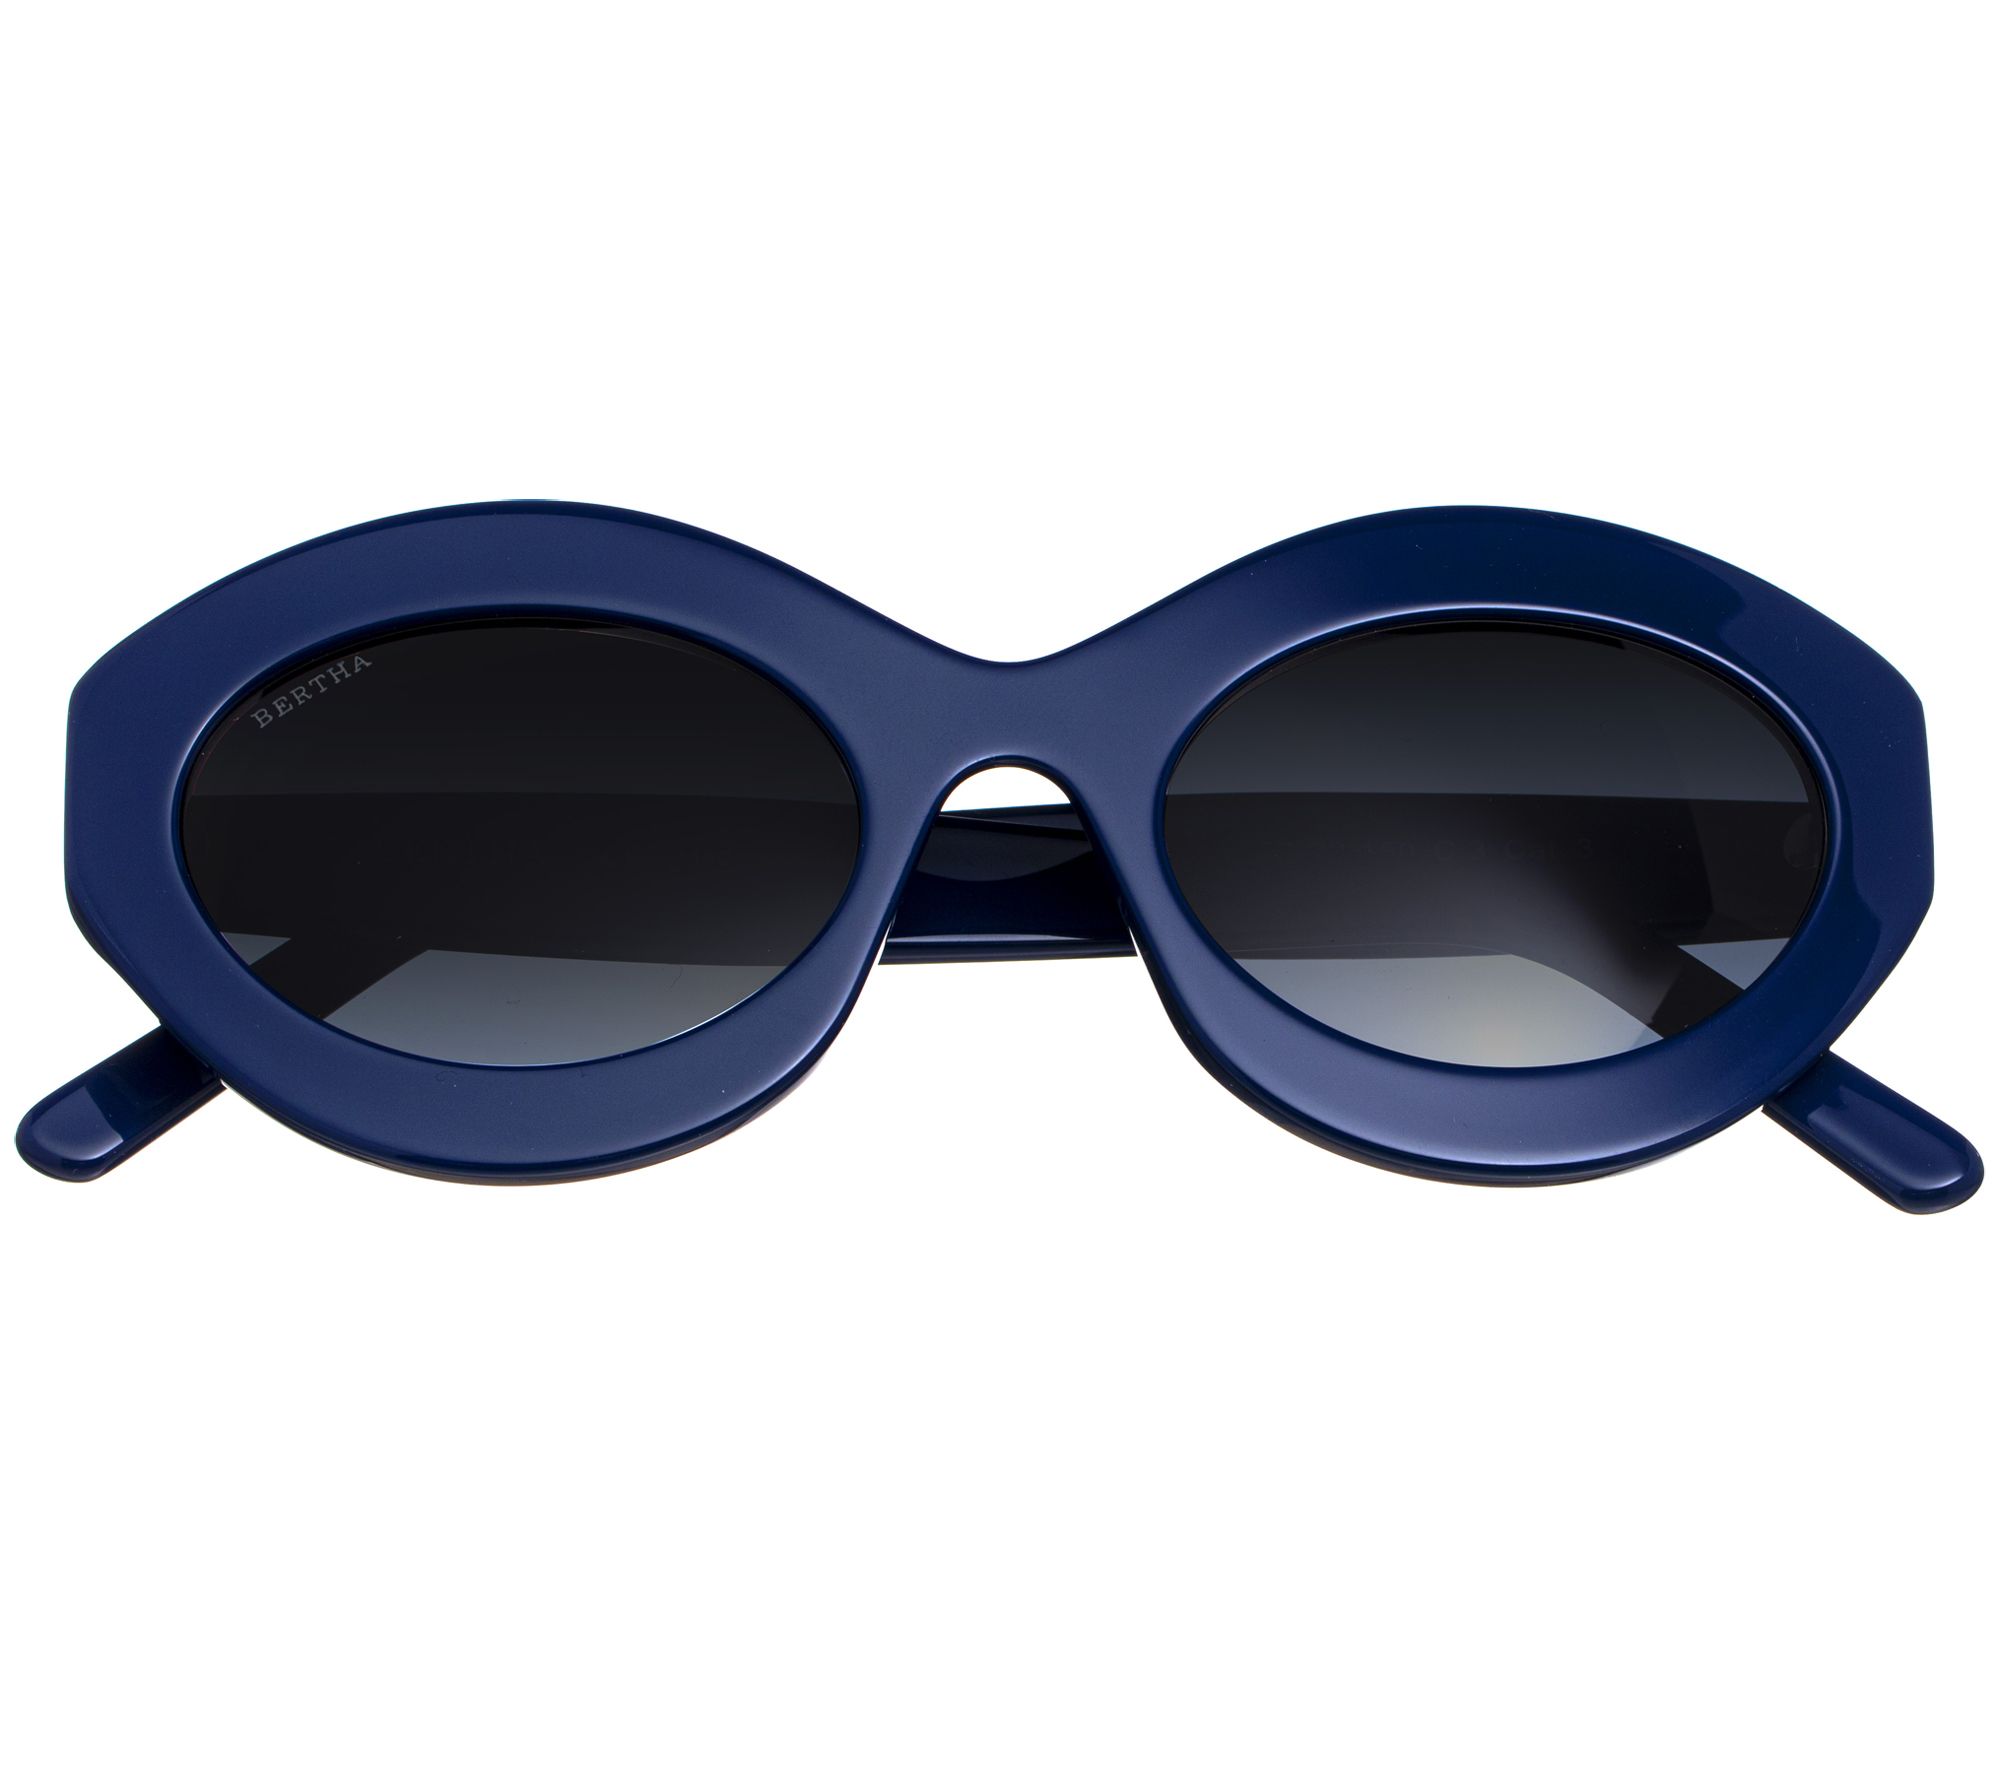 Bertha Oval Sunglasses - Seve rine - QVC.com